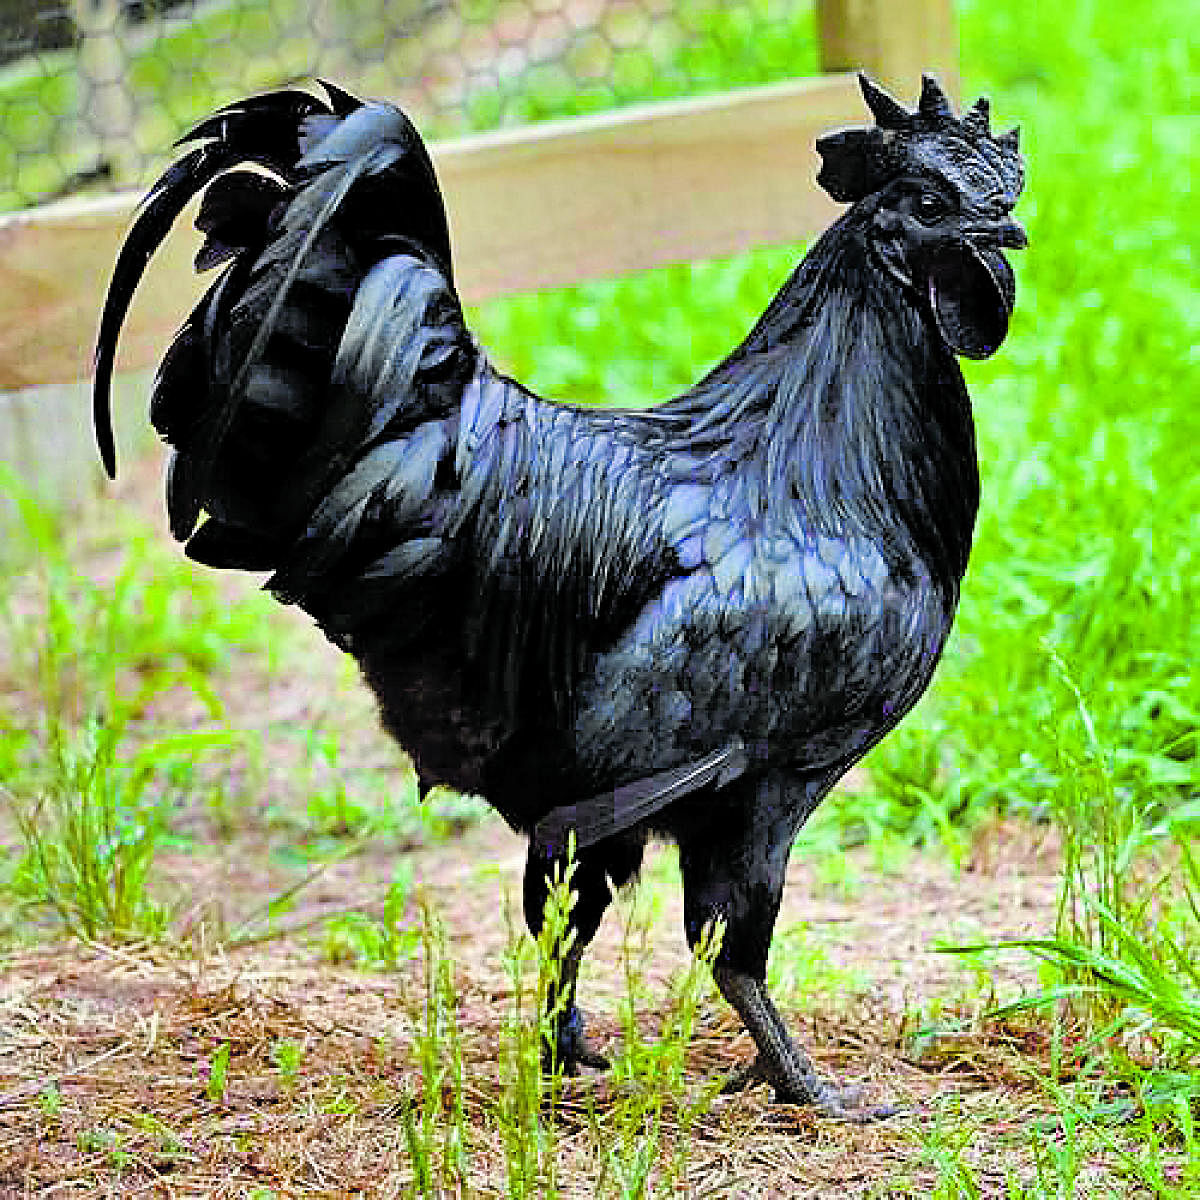 Kadaknath chicken rearing. (DH File Image)